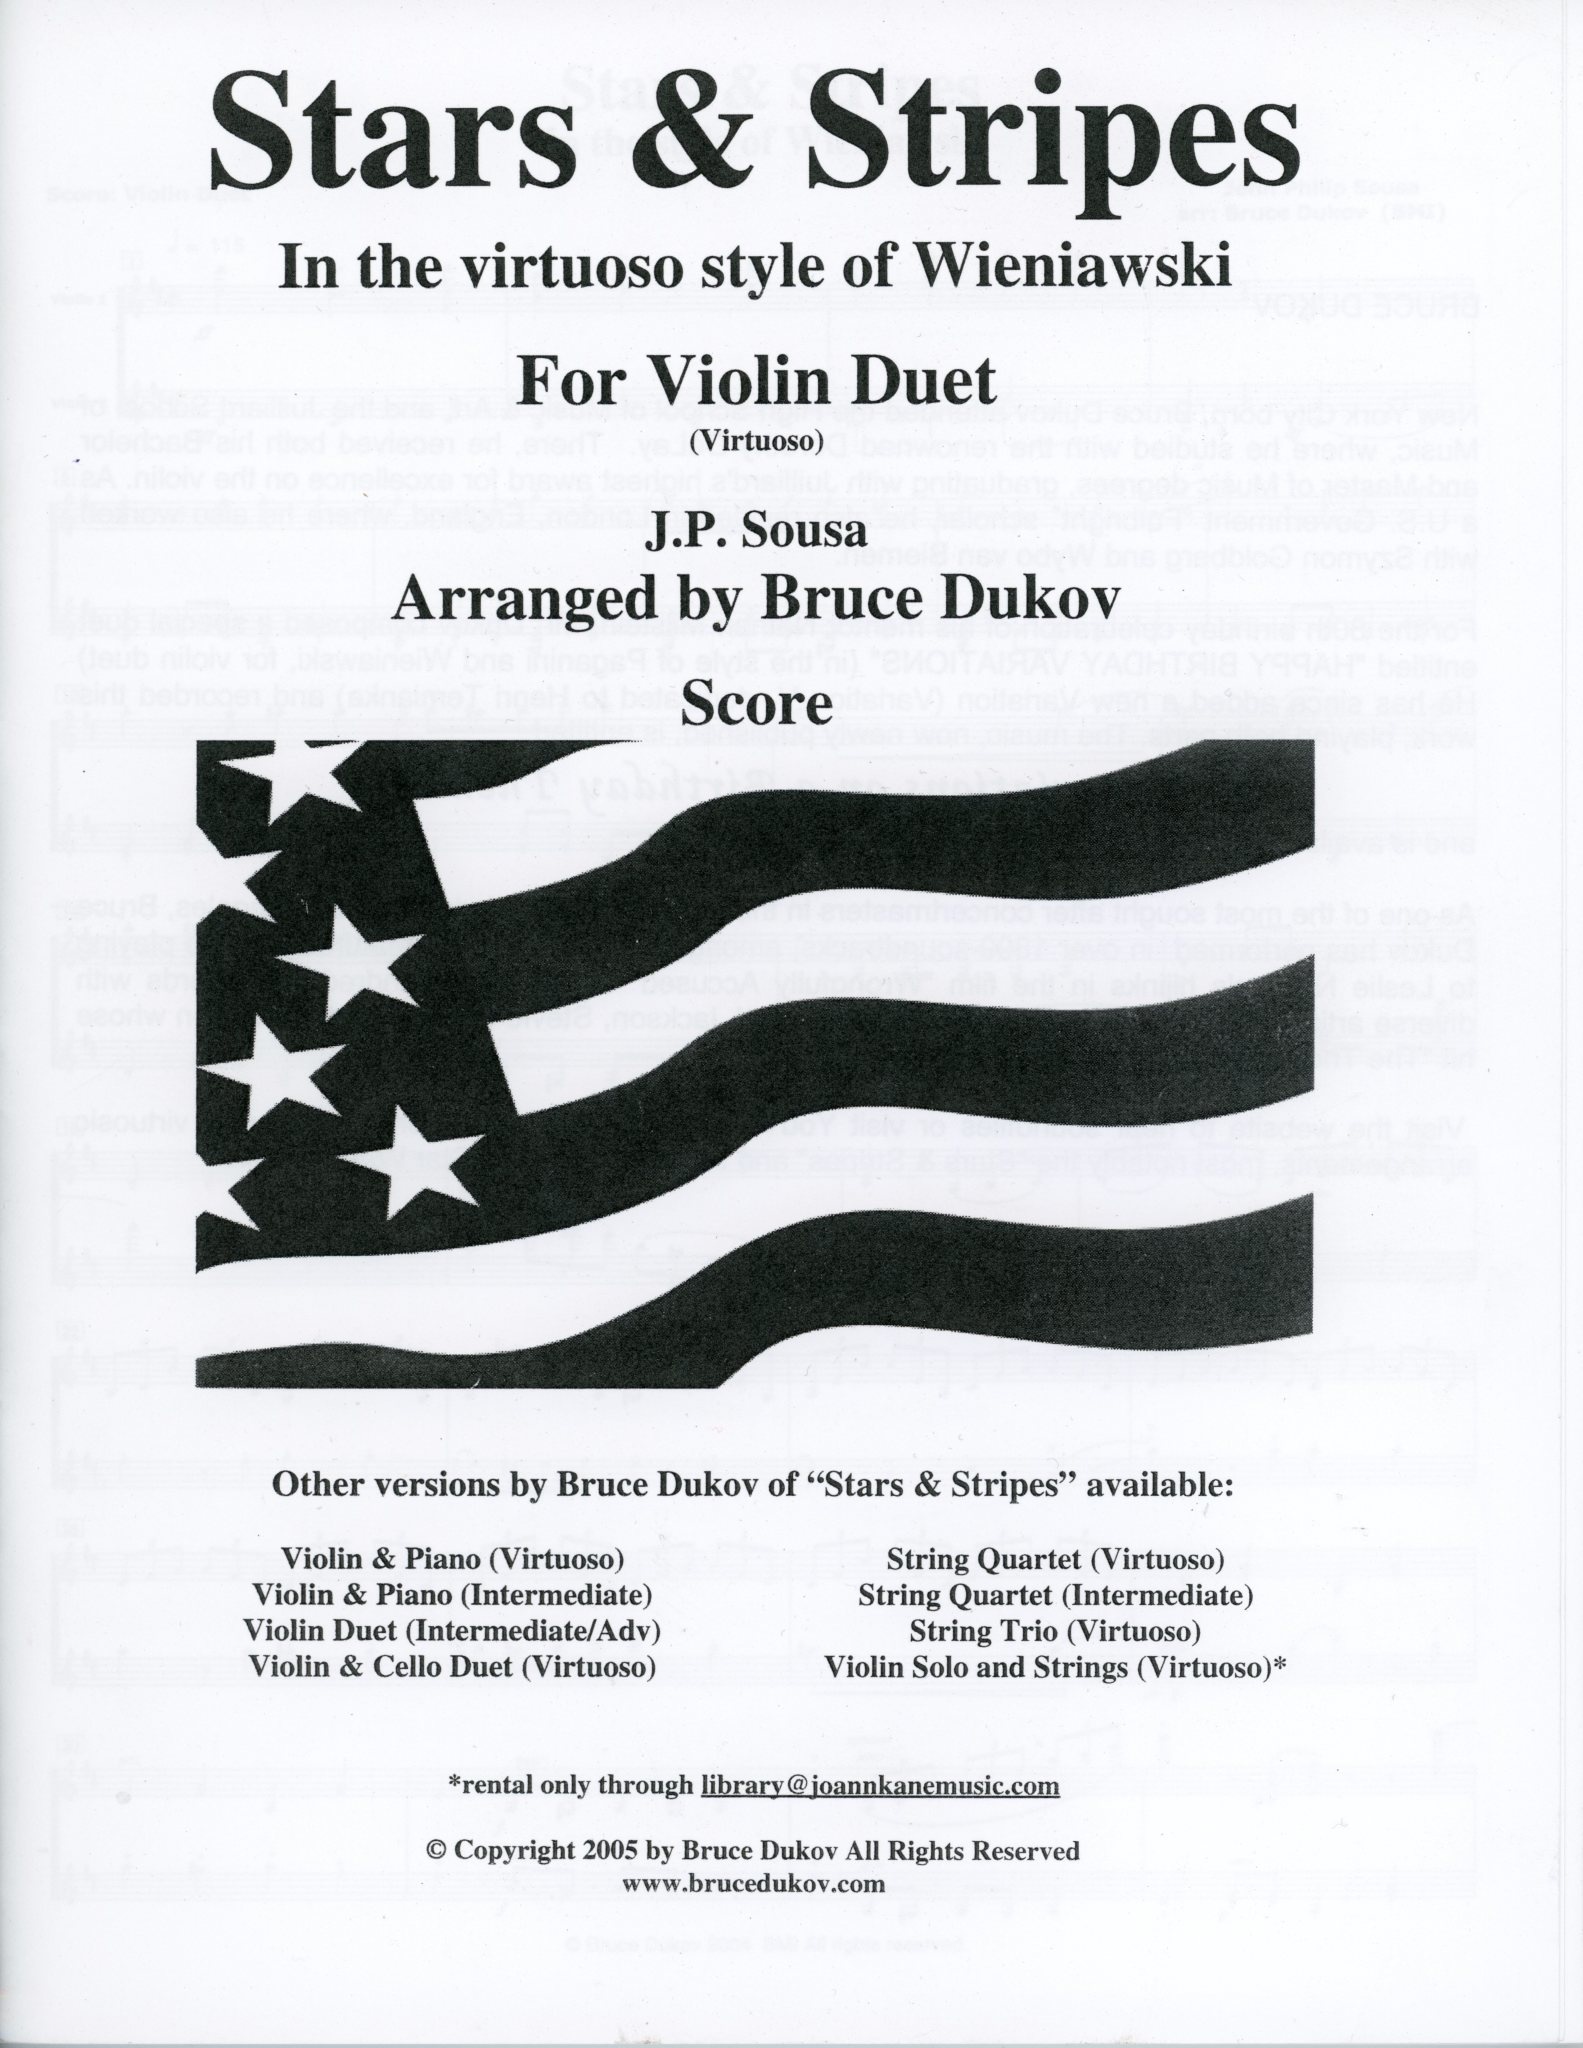 Bruce Dukov Sousa, J.P. (Bruce Dukov): Stars & Stripes Violin Duet, in the style of Wieniawski, virtuoso level, parts & score, 2 violins